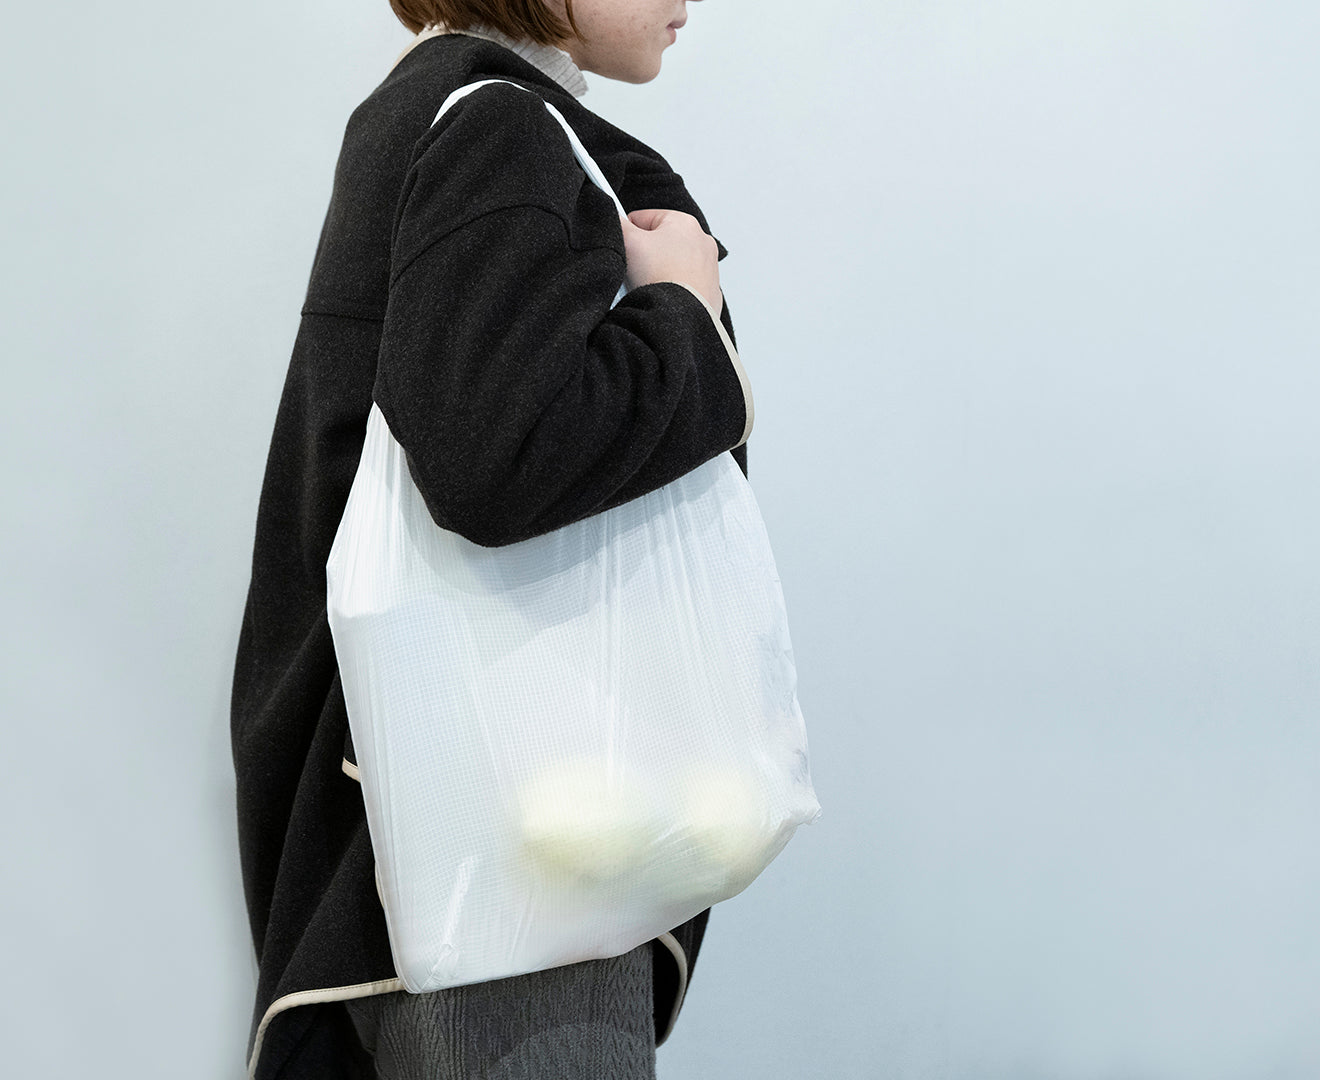 COCOON Reusable Grocery Bag, Regular